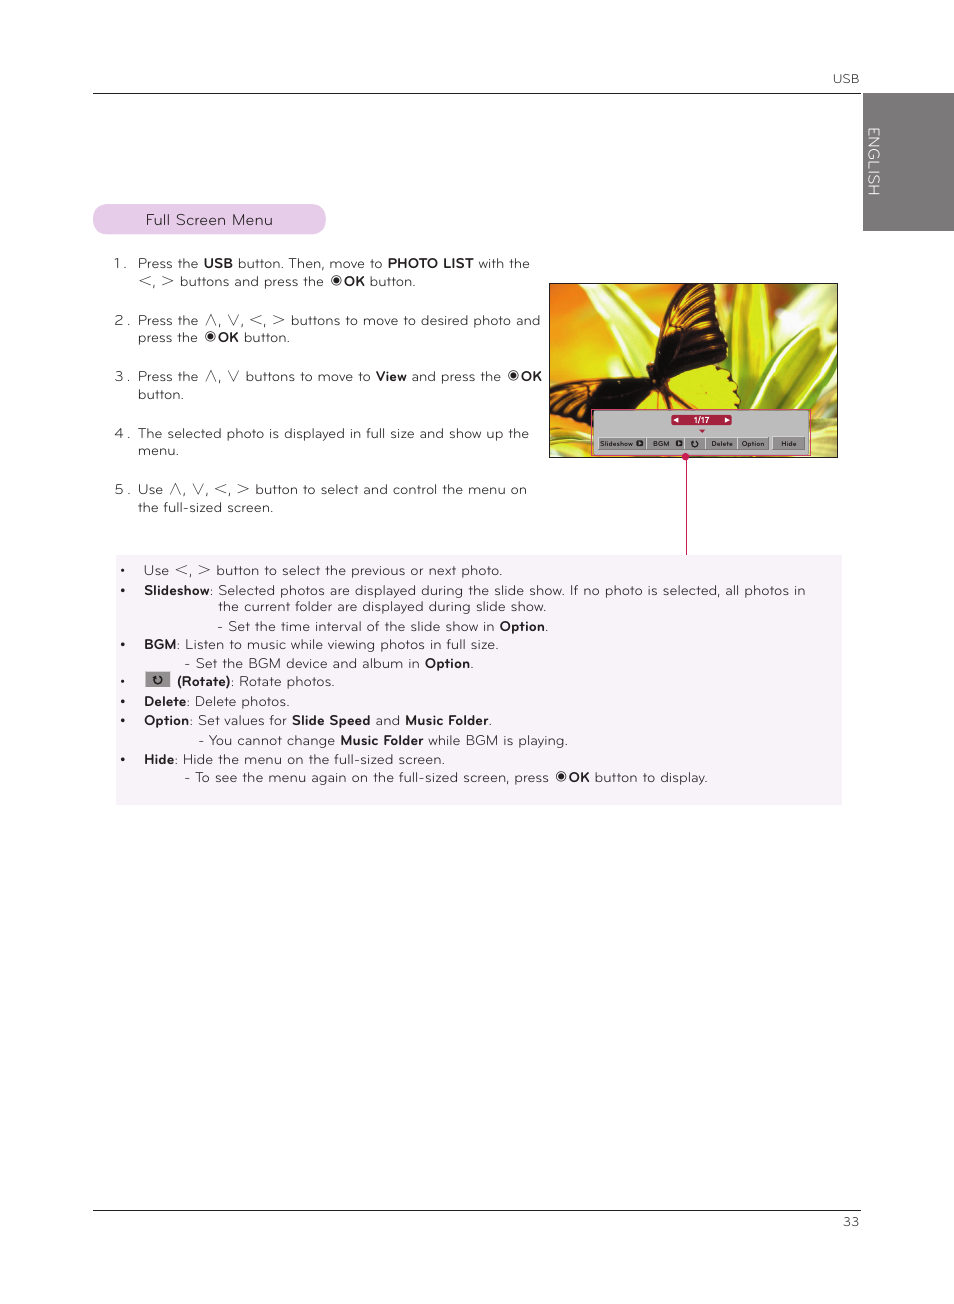 Full screen menu | LG HX301G User Manual | Page 33 / 44